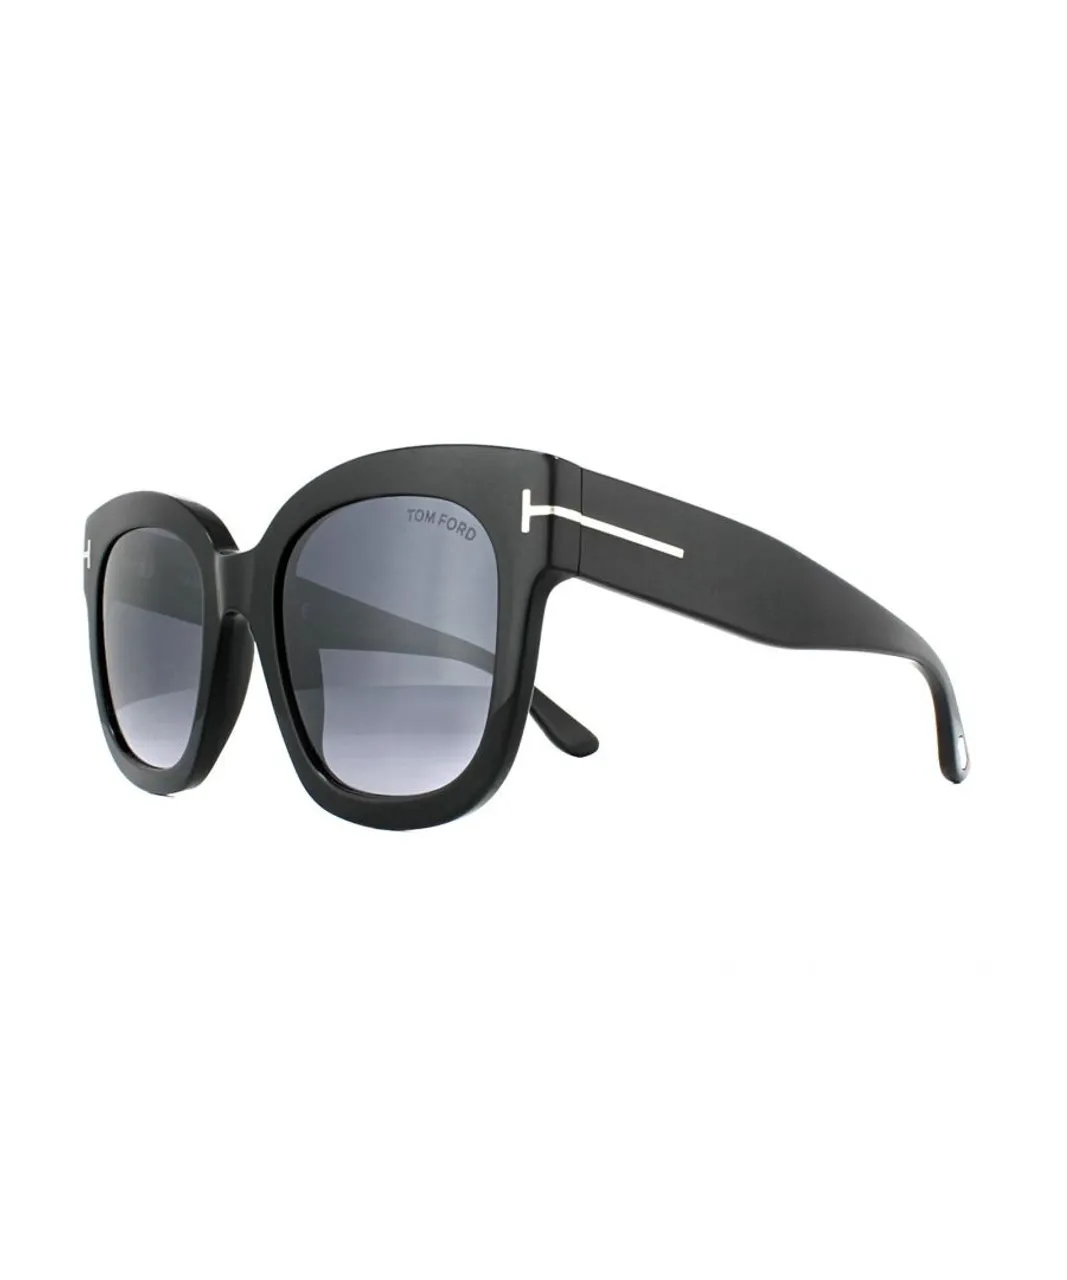 Tom Ford Womens Sunglasses 0613 Beatrix 01C Shiny Black Smoke Grey Mirror - One